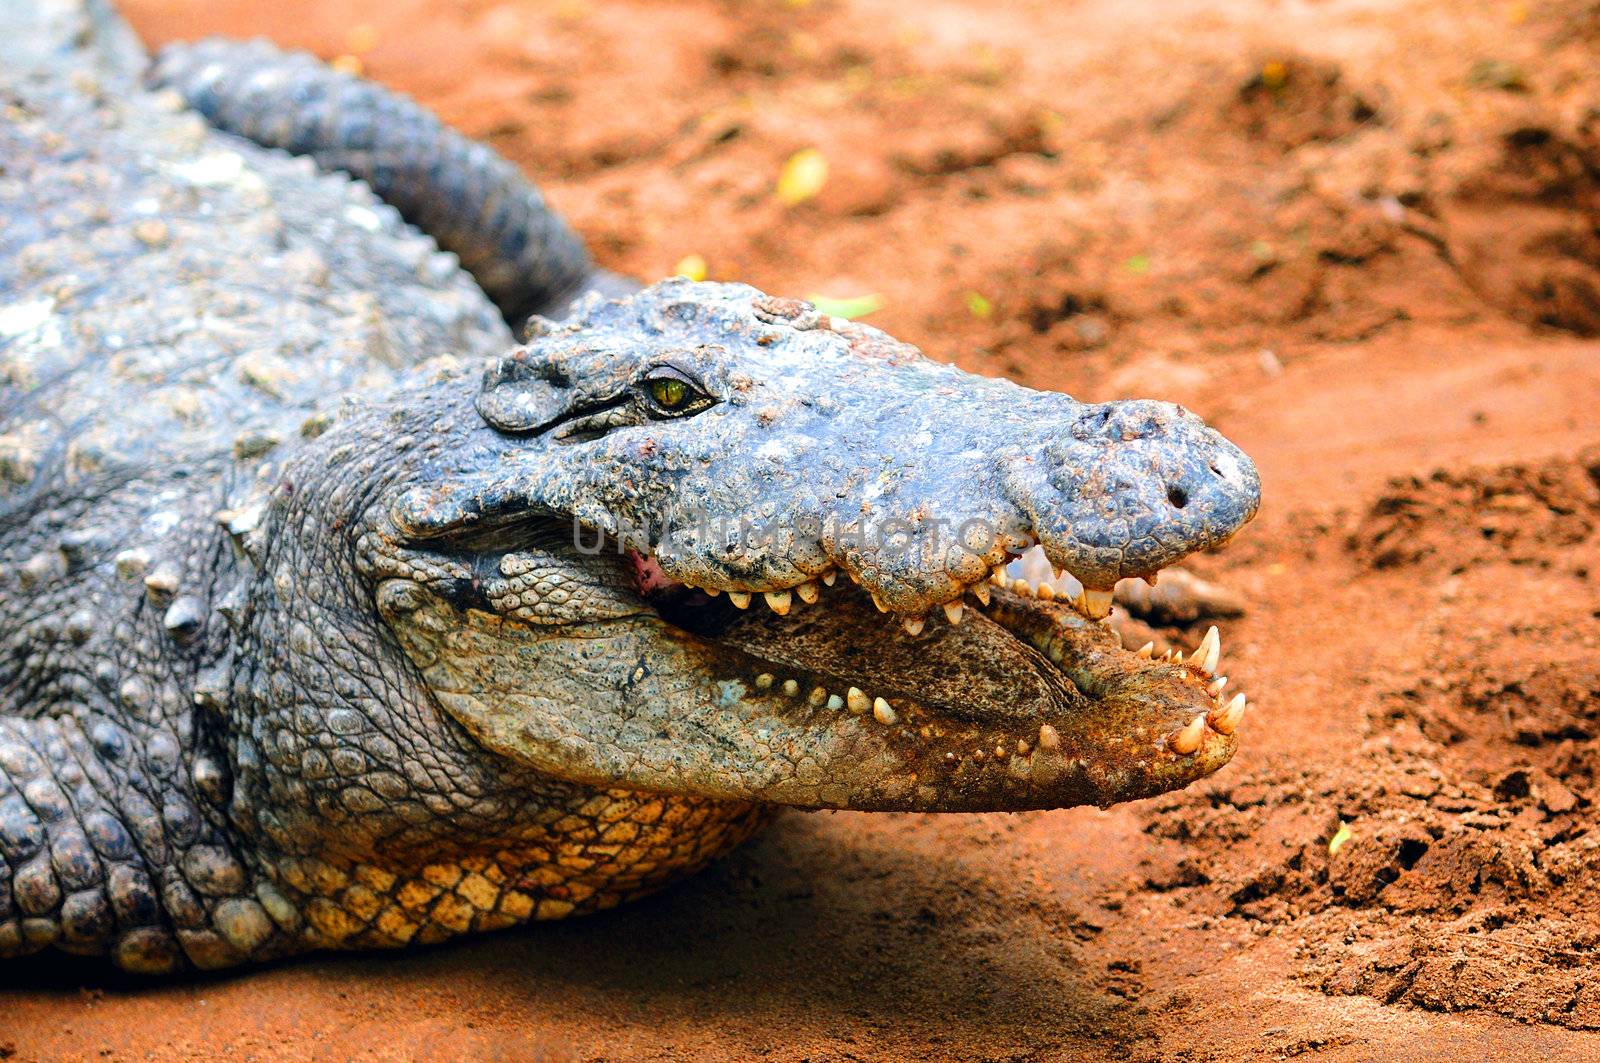 Extreme closeup of a massive crocodile at a local zoo